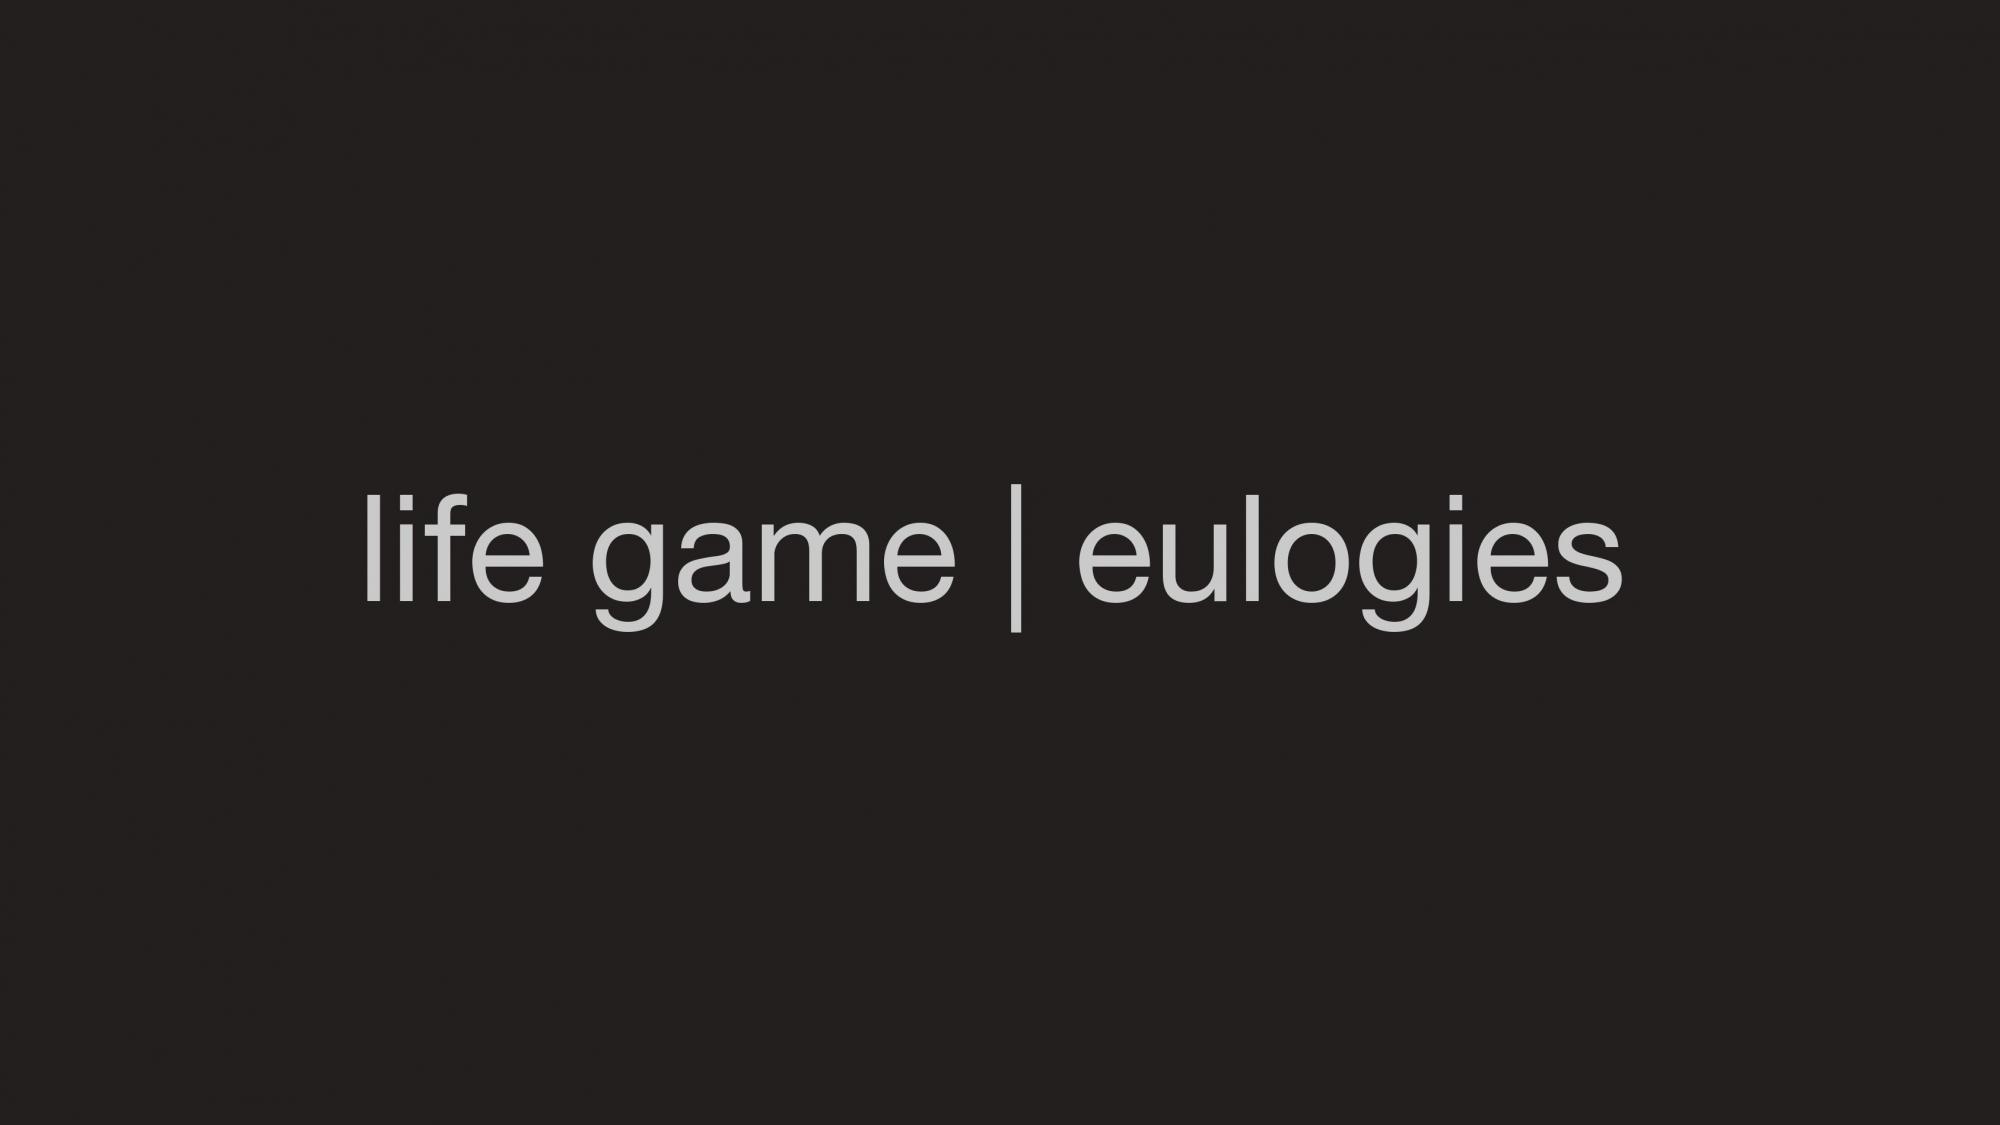 Text reads 'life game | eulogies'